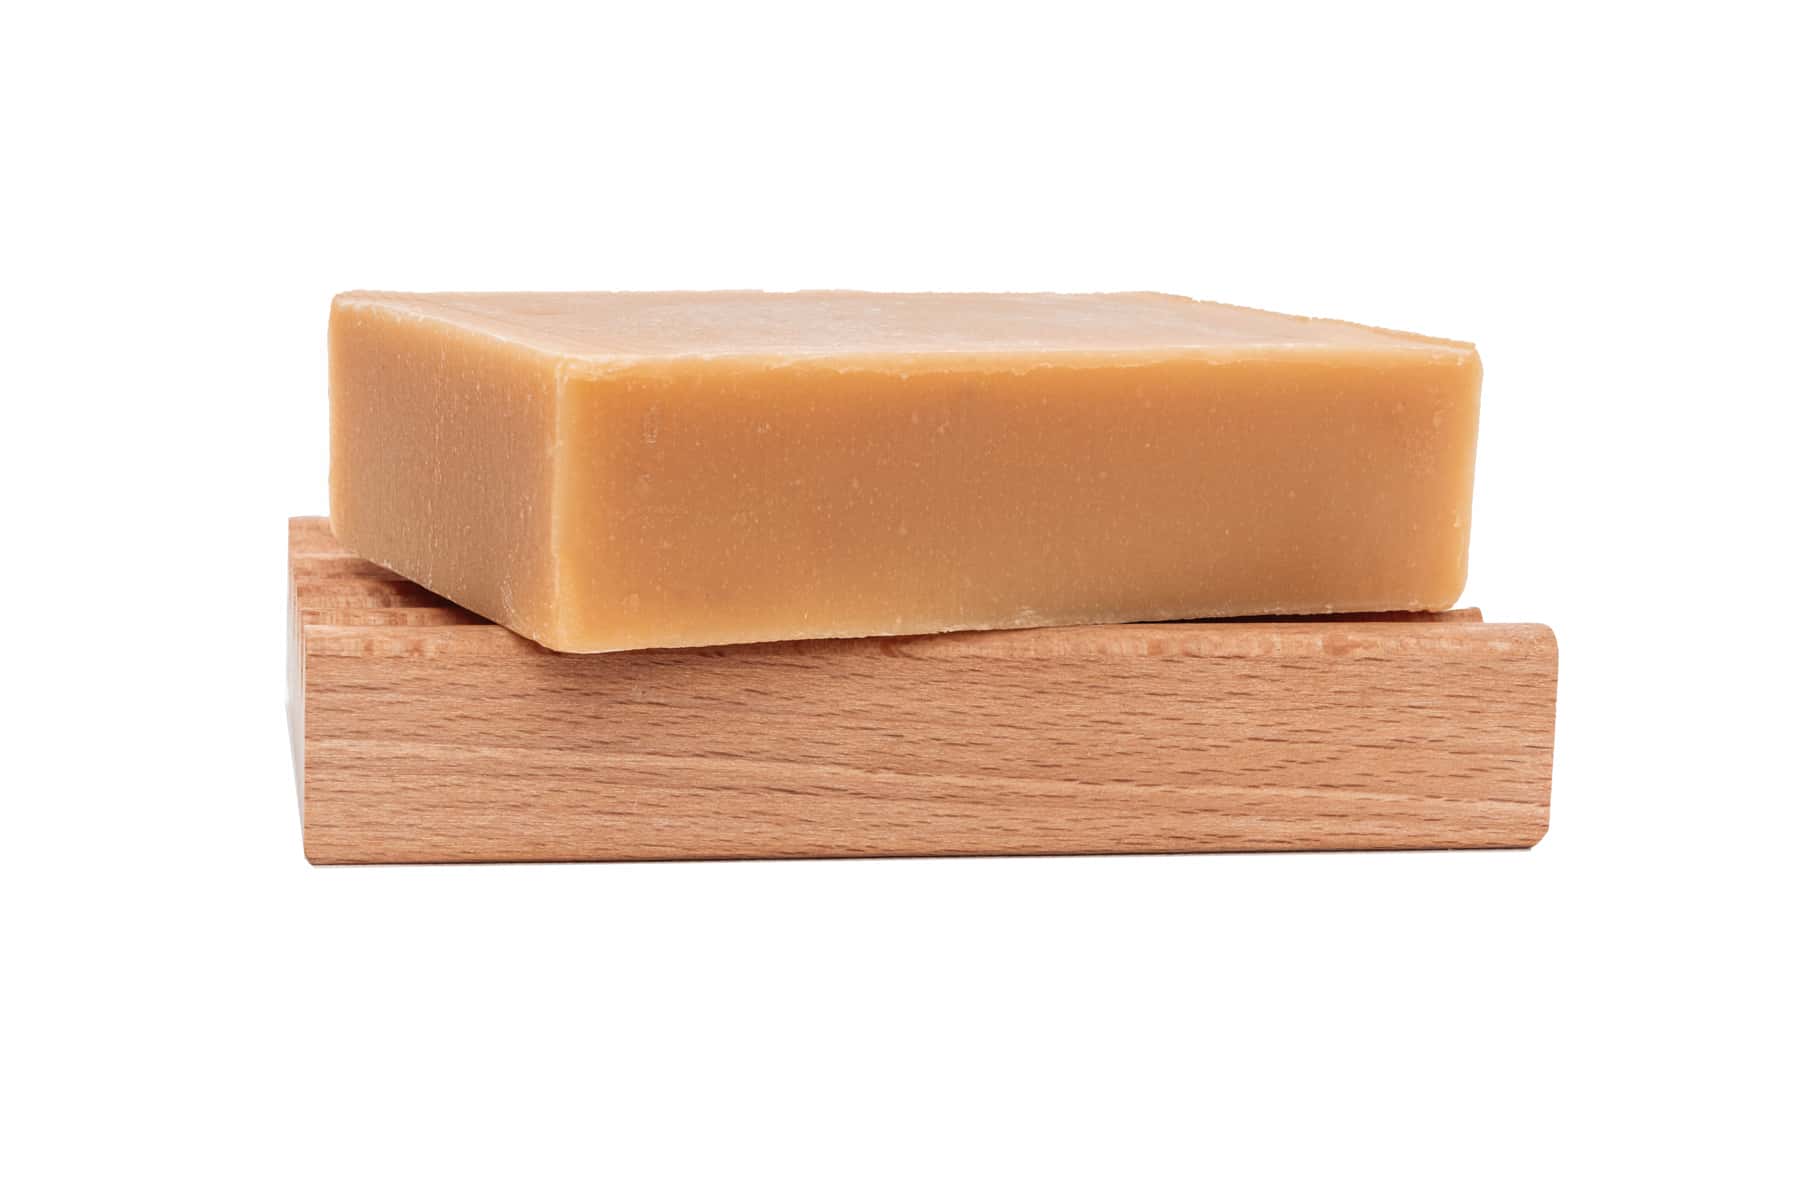 Unwrapped Eucalyptus Spearmint bar of soap